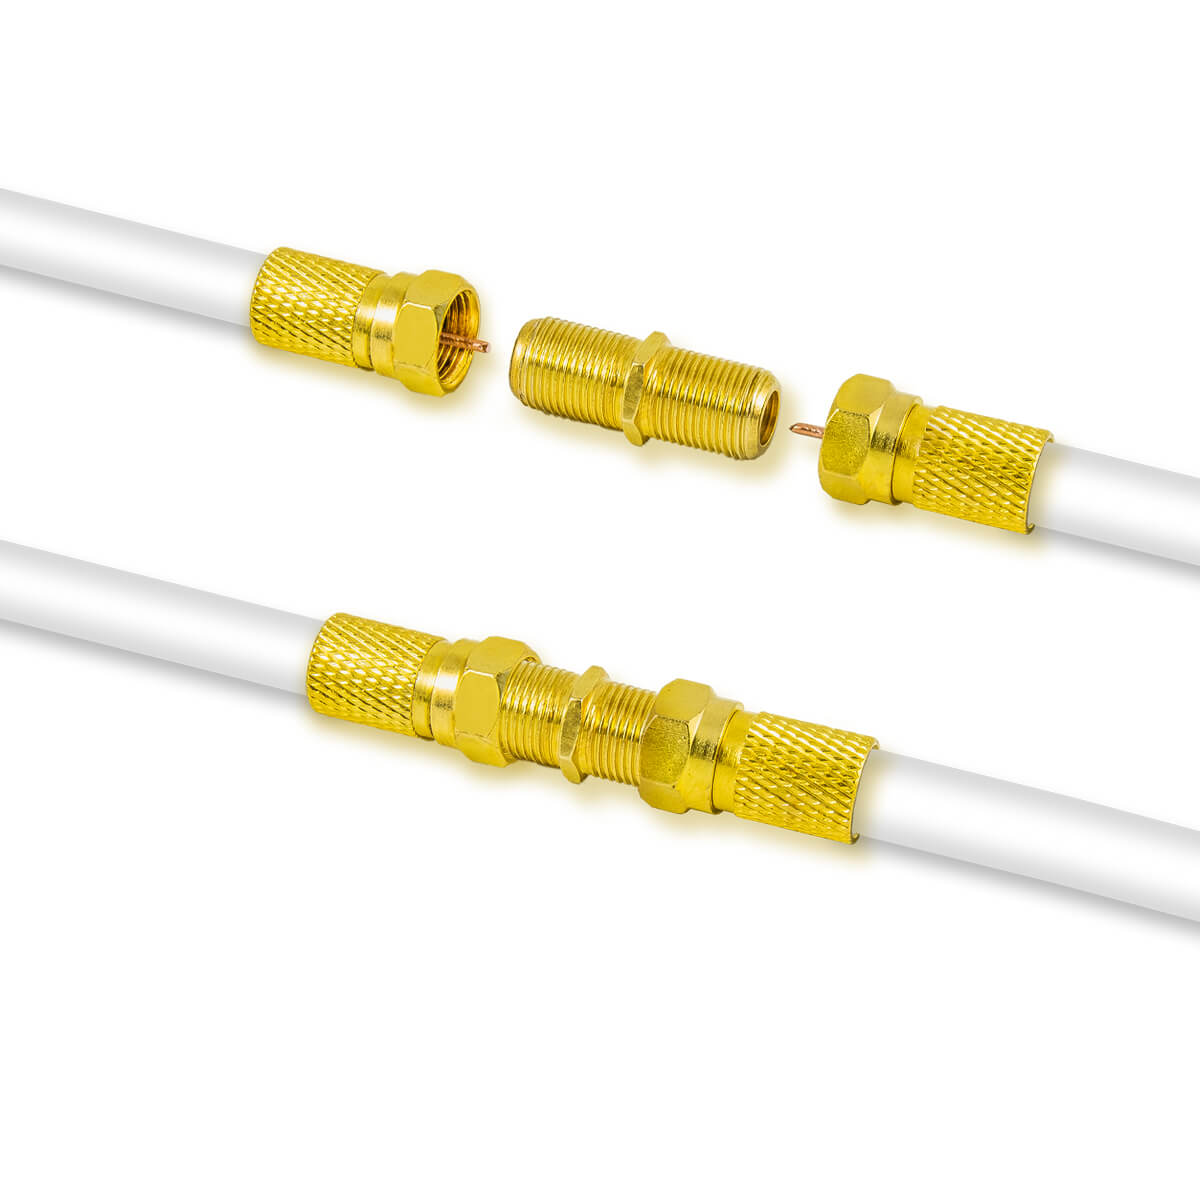 F-Verbinder für Sat Kabel koaxialkabel verlängerung